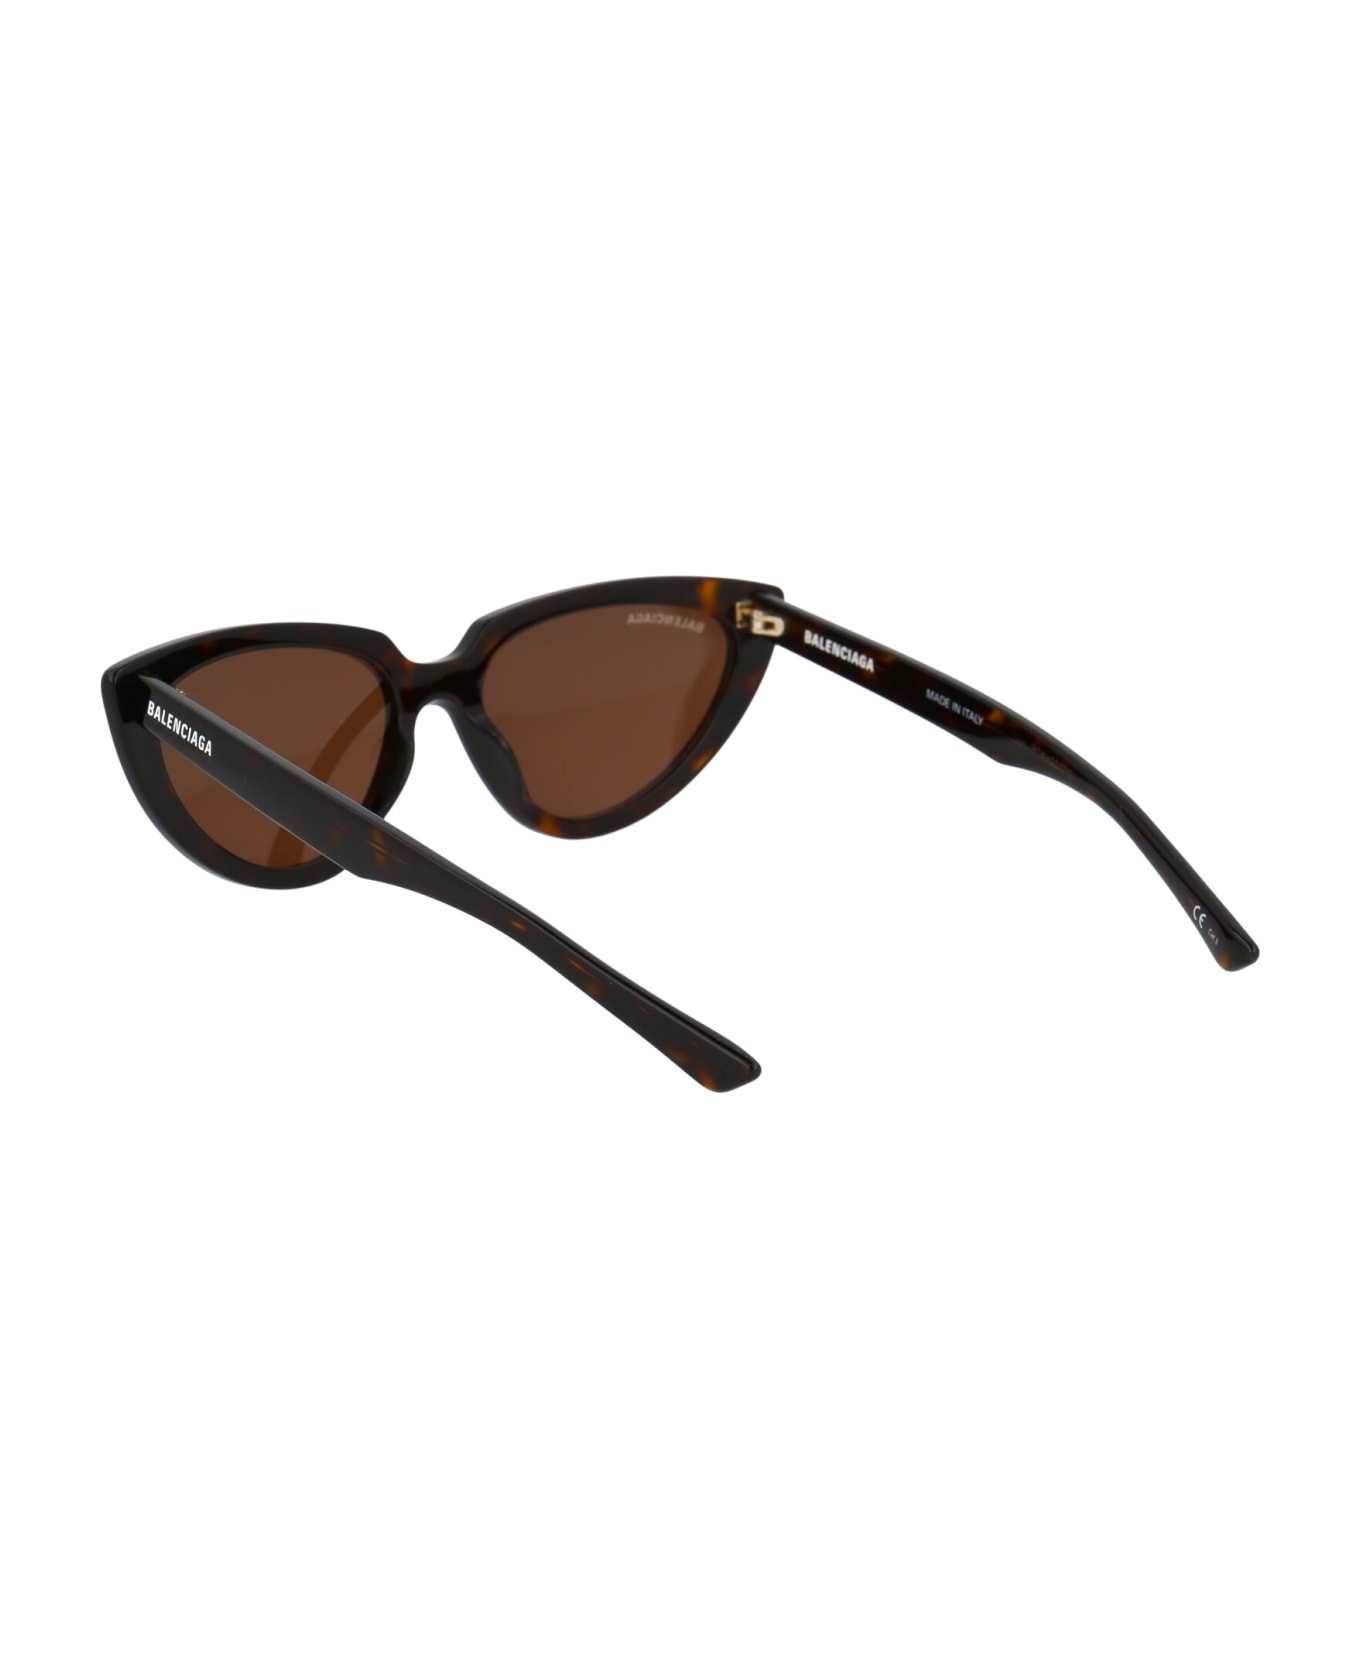 Balenciaga Eyewear Bb0182s Sunglasses - 002 HAVANA HAVANA BROWN